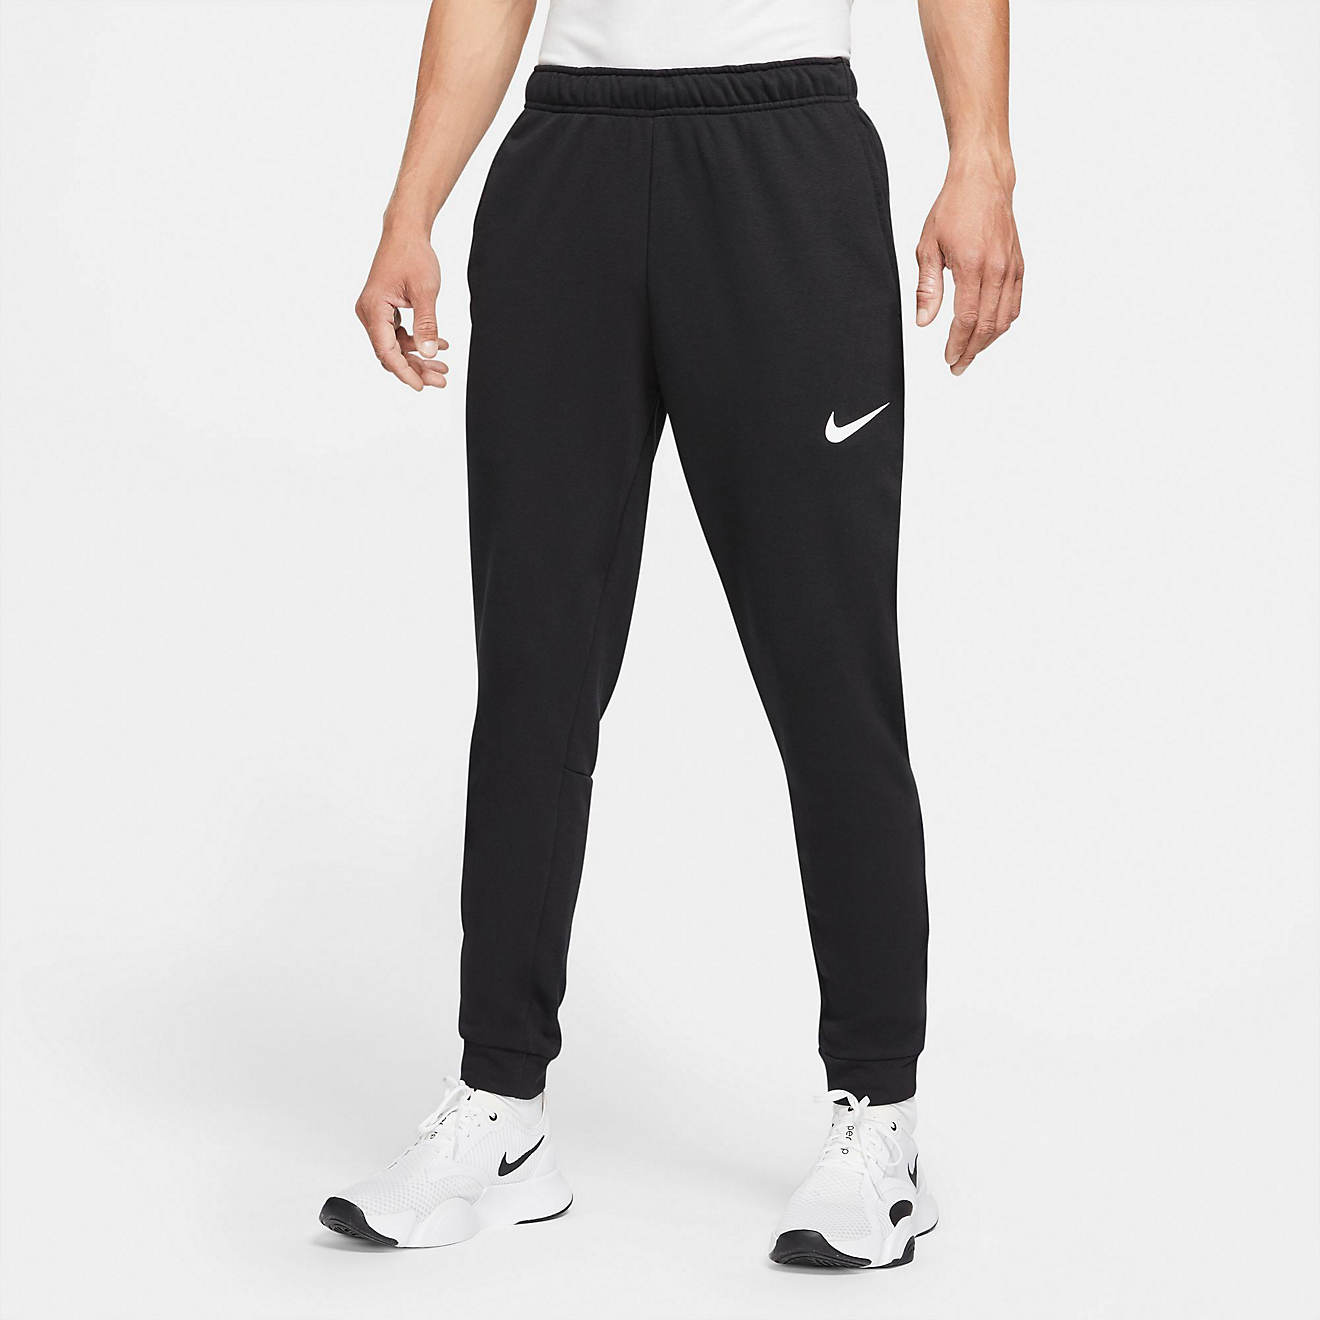 Repegar cero costilla Nike Men's Dri-FI Tapered Training Pants | Academy